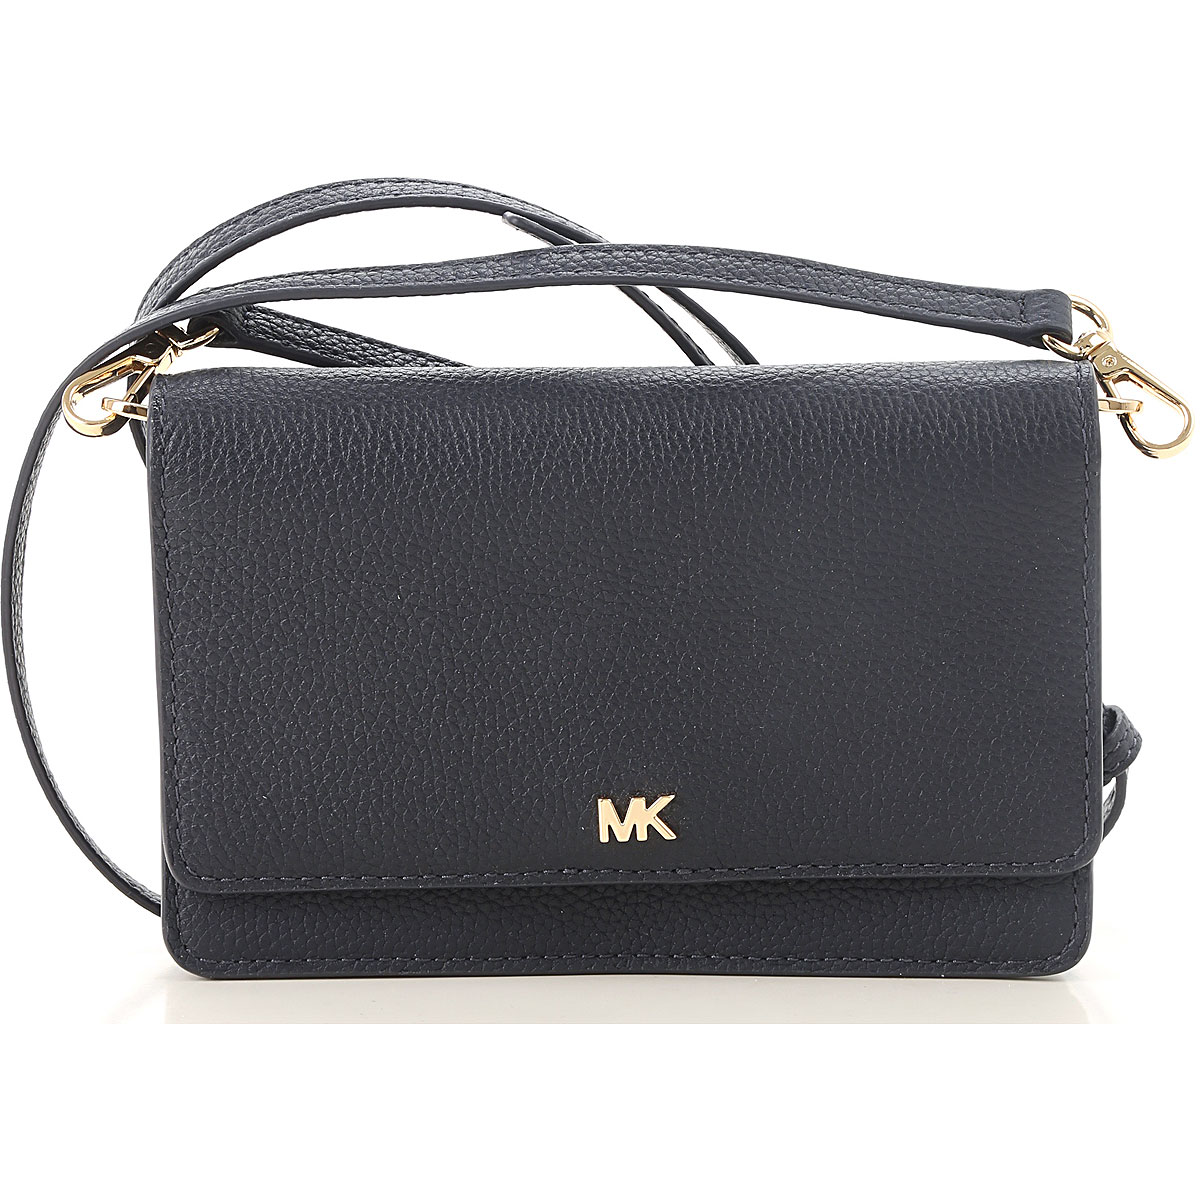 Handbags Michael Kors, Style code: 32t8gf5c1l-414-